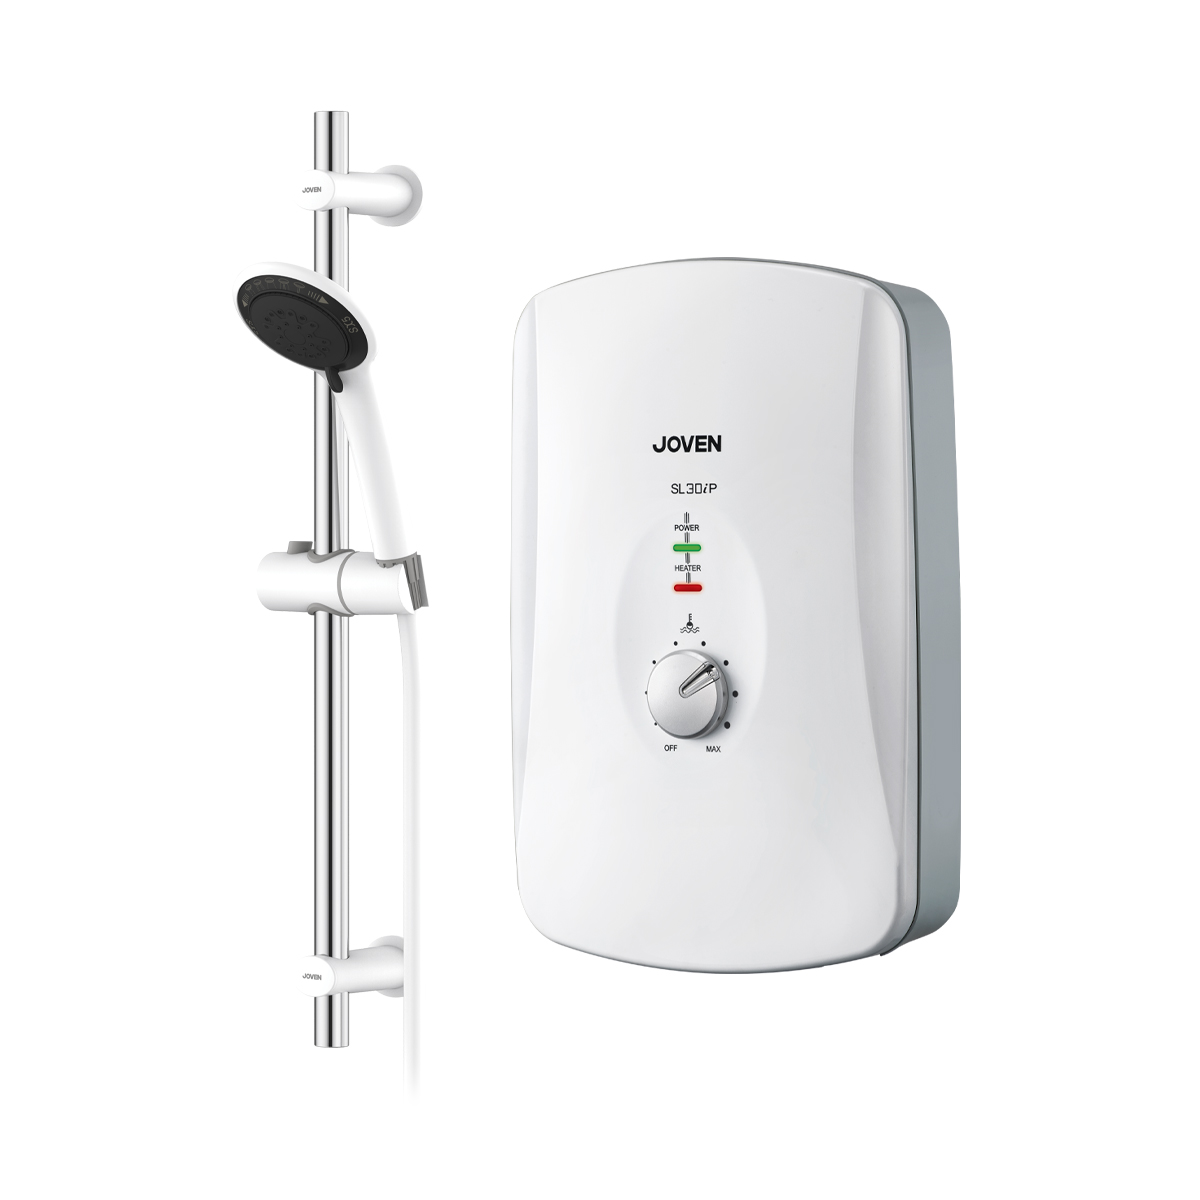 Joven Water Heater - Joven Instant Water Heater (DC Pump) Inverter 5-Spray Pattern Showerhead SL30iP - ShopJourney